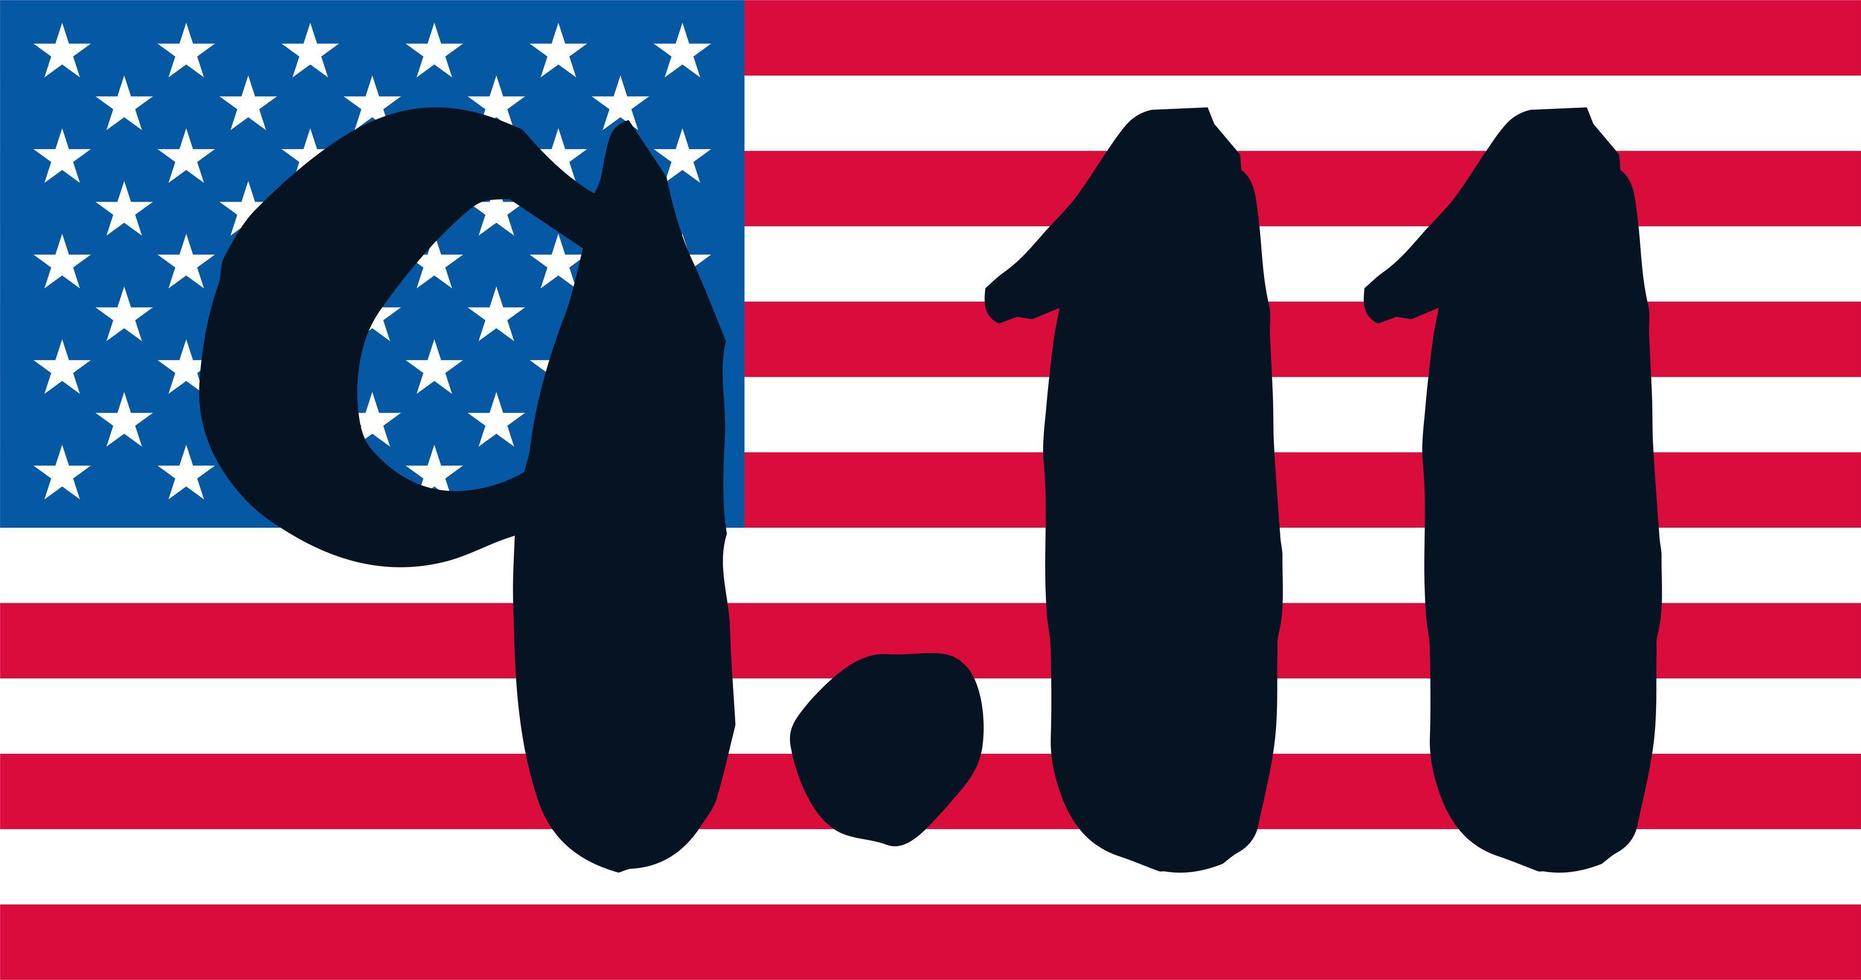 Patriot Day Banner vector